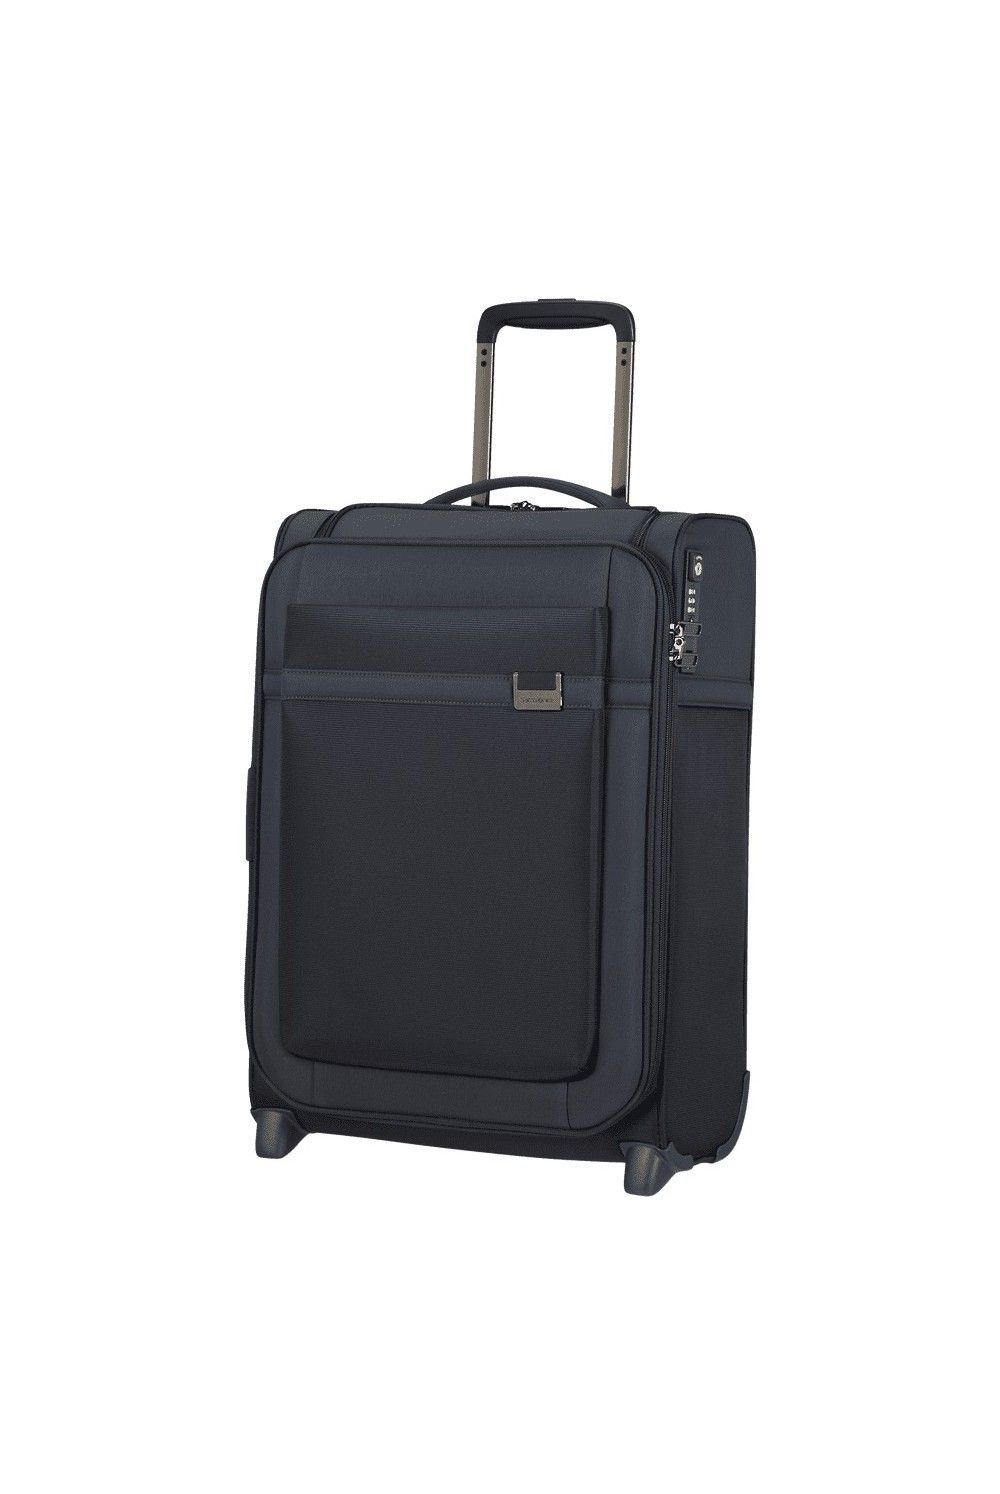 Samsonite Airea 55x40x20-23cm 2 wheel hand luggage